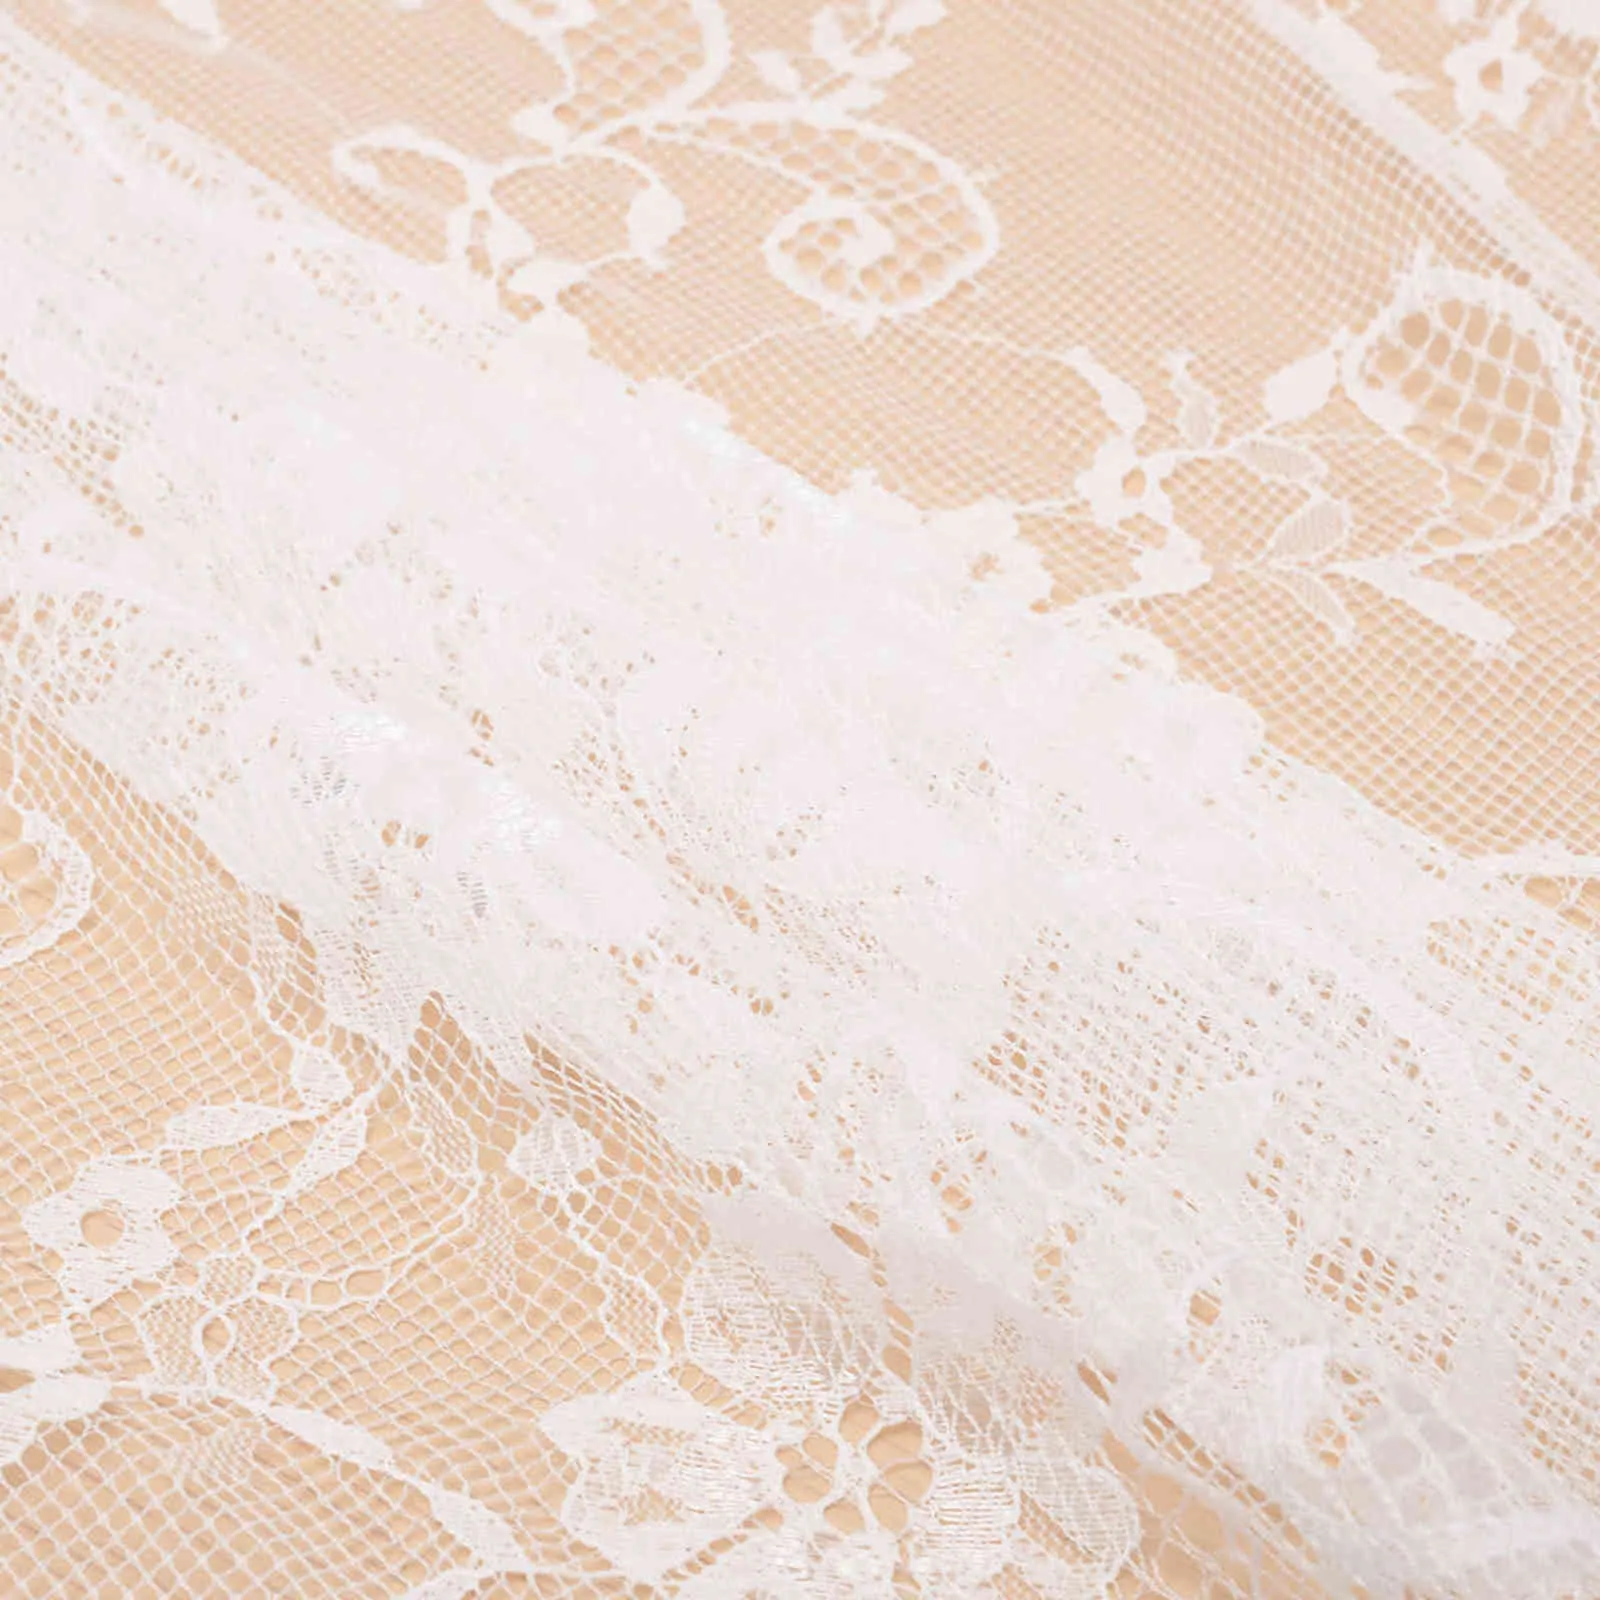 TableCloth Bordado Lace Branco Vintage Cozinha Chá De Café Mesa De Café Pano Para Party Wedding El Decor 211103